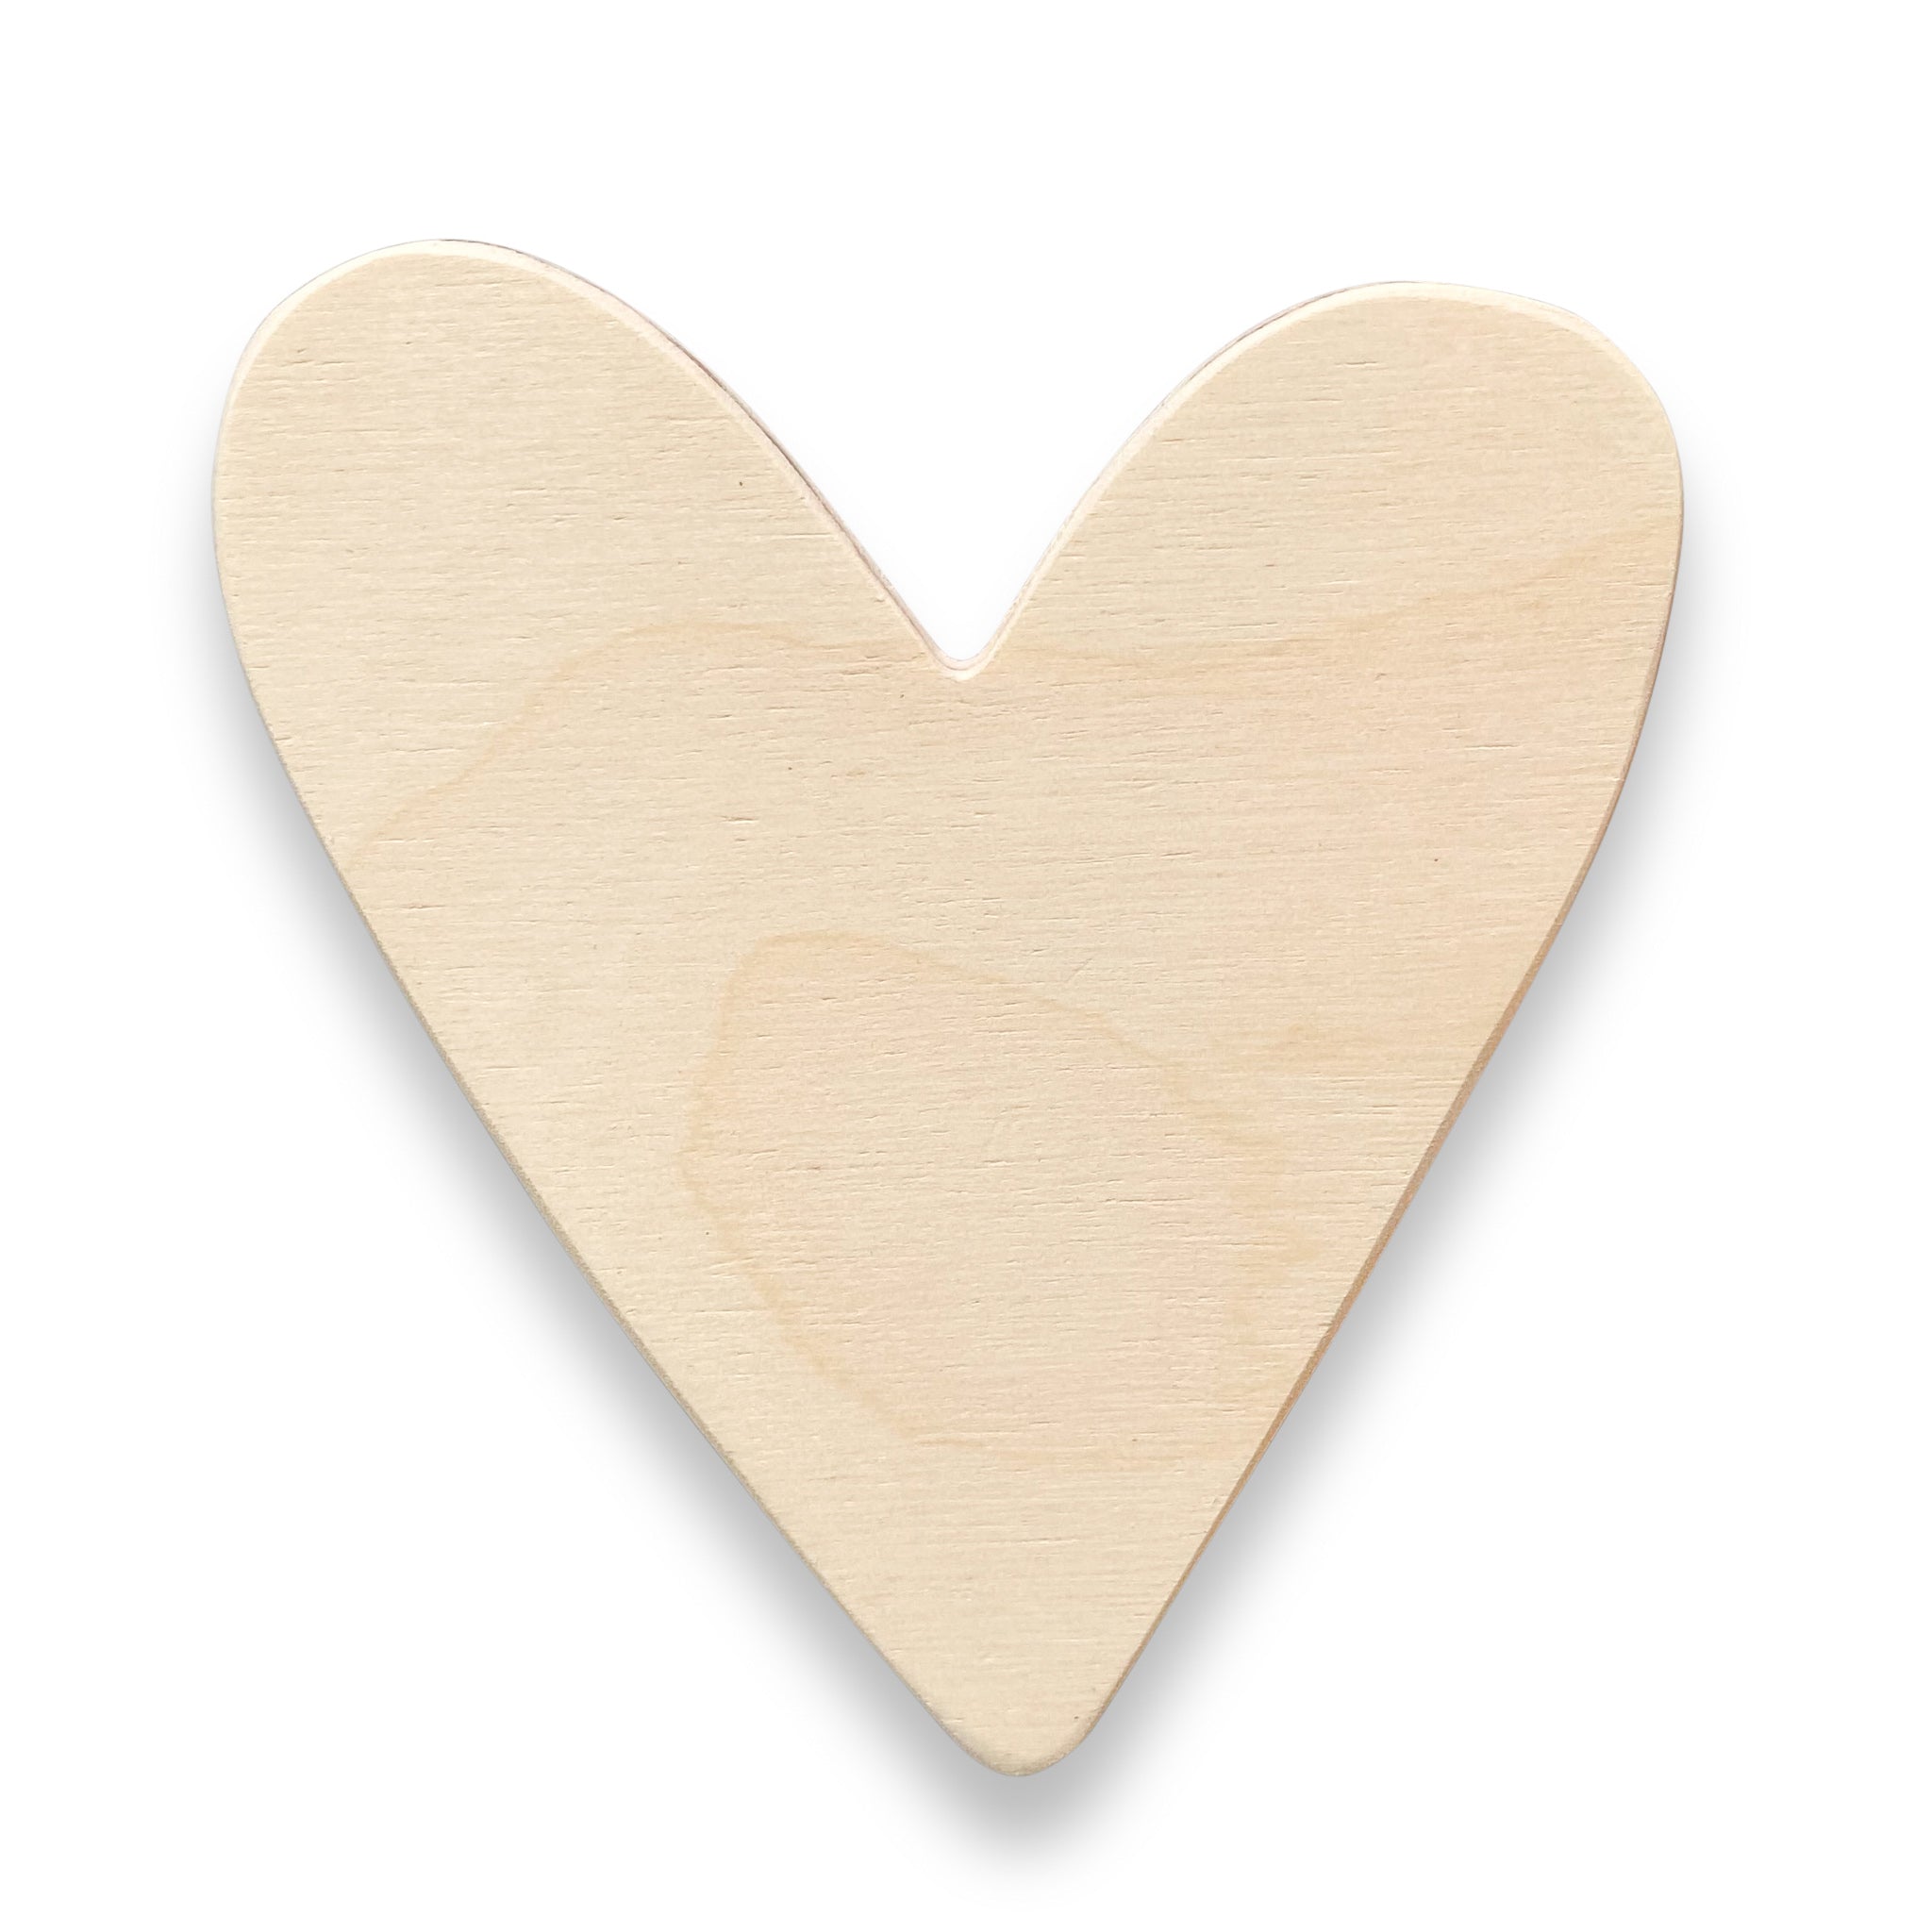 Blank houten wandhaken kinderkamer | Wolk en hart - toddie.fr